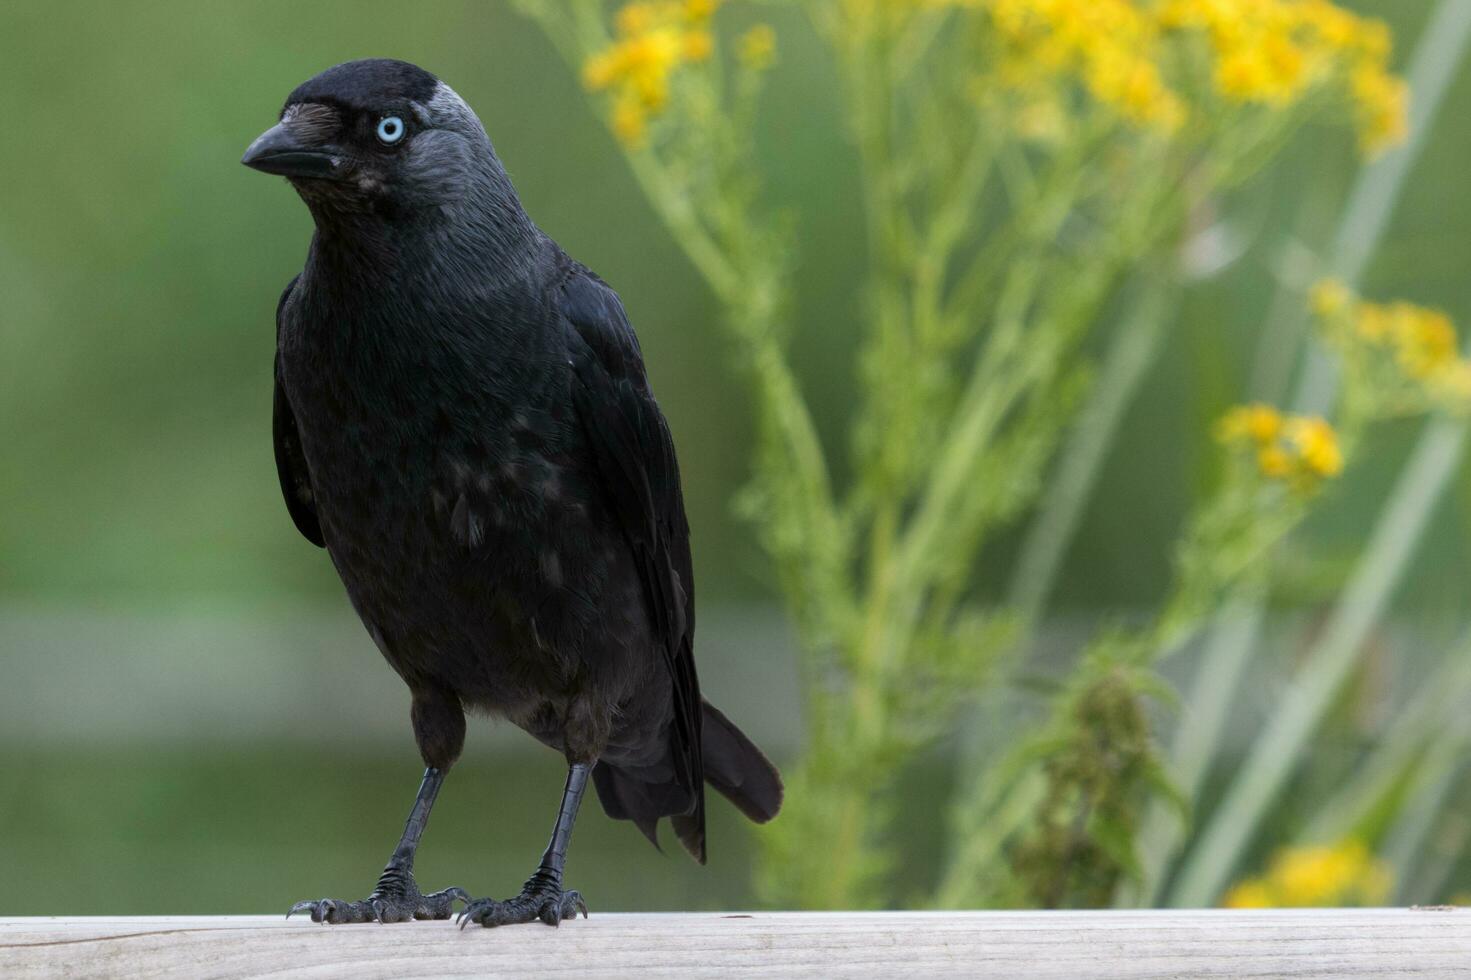 choucas corbeau dans Angleterre photo